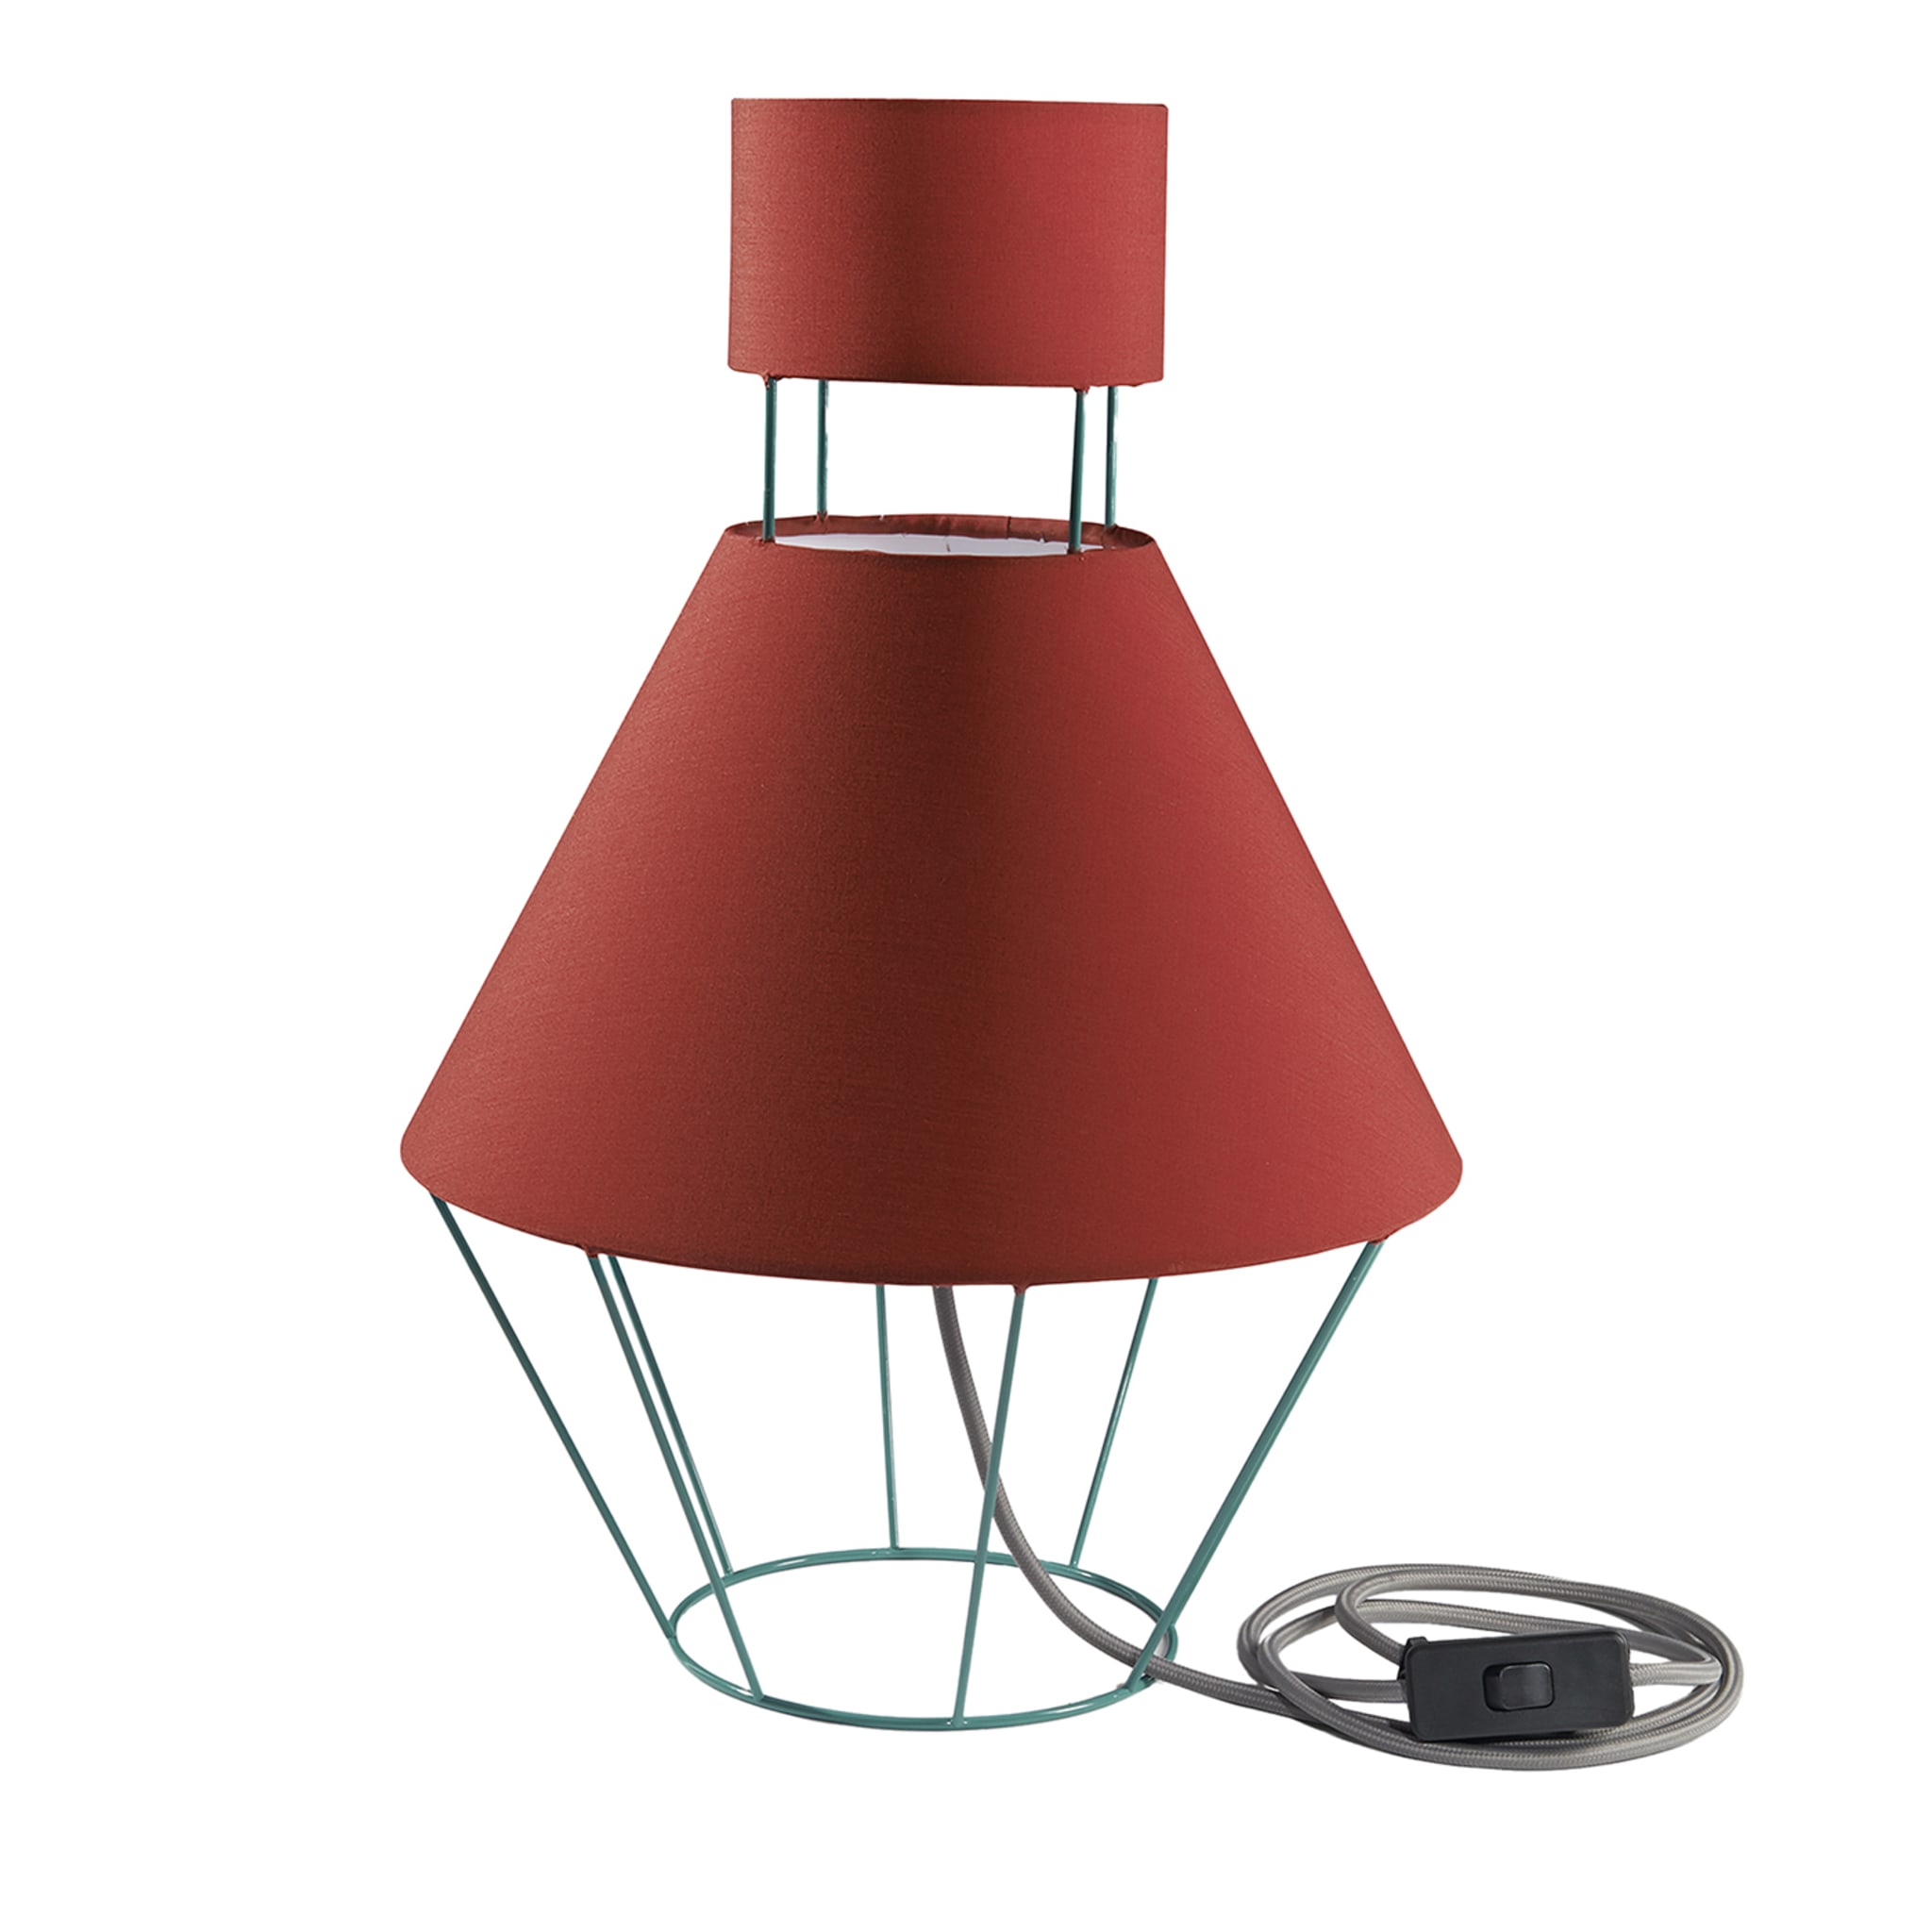 Balloon Mint-Green & Cherry-Red Table Lamp by Giorgia Zanellato - Alternative view 1